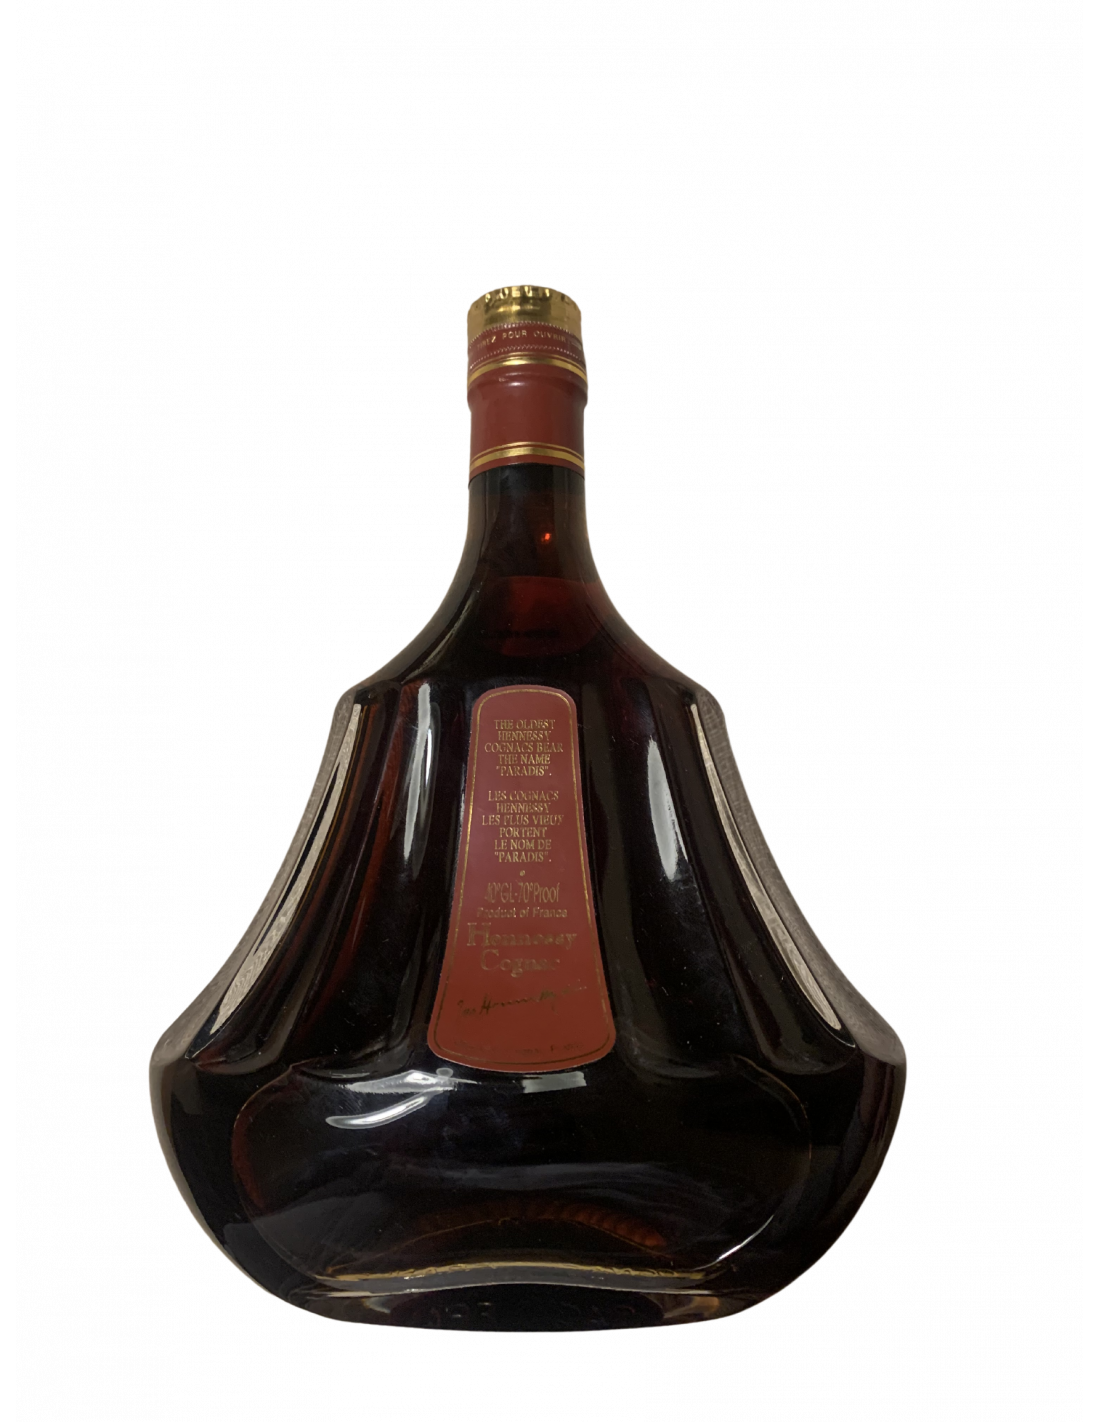 Hennessy James Hennessy Cognac - Buy Online on Cognac-Expert.com